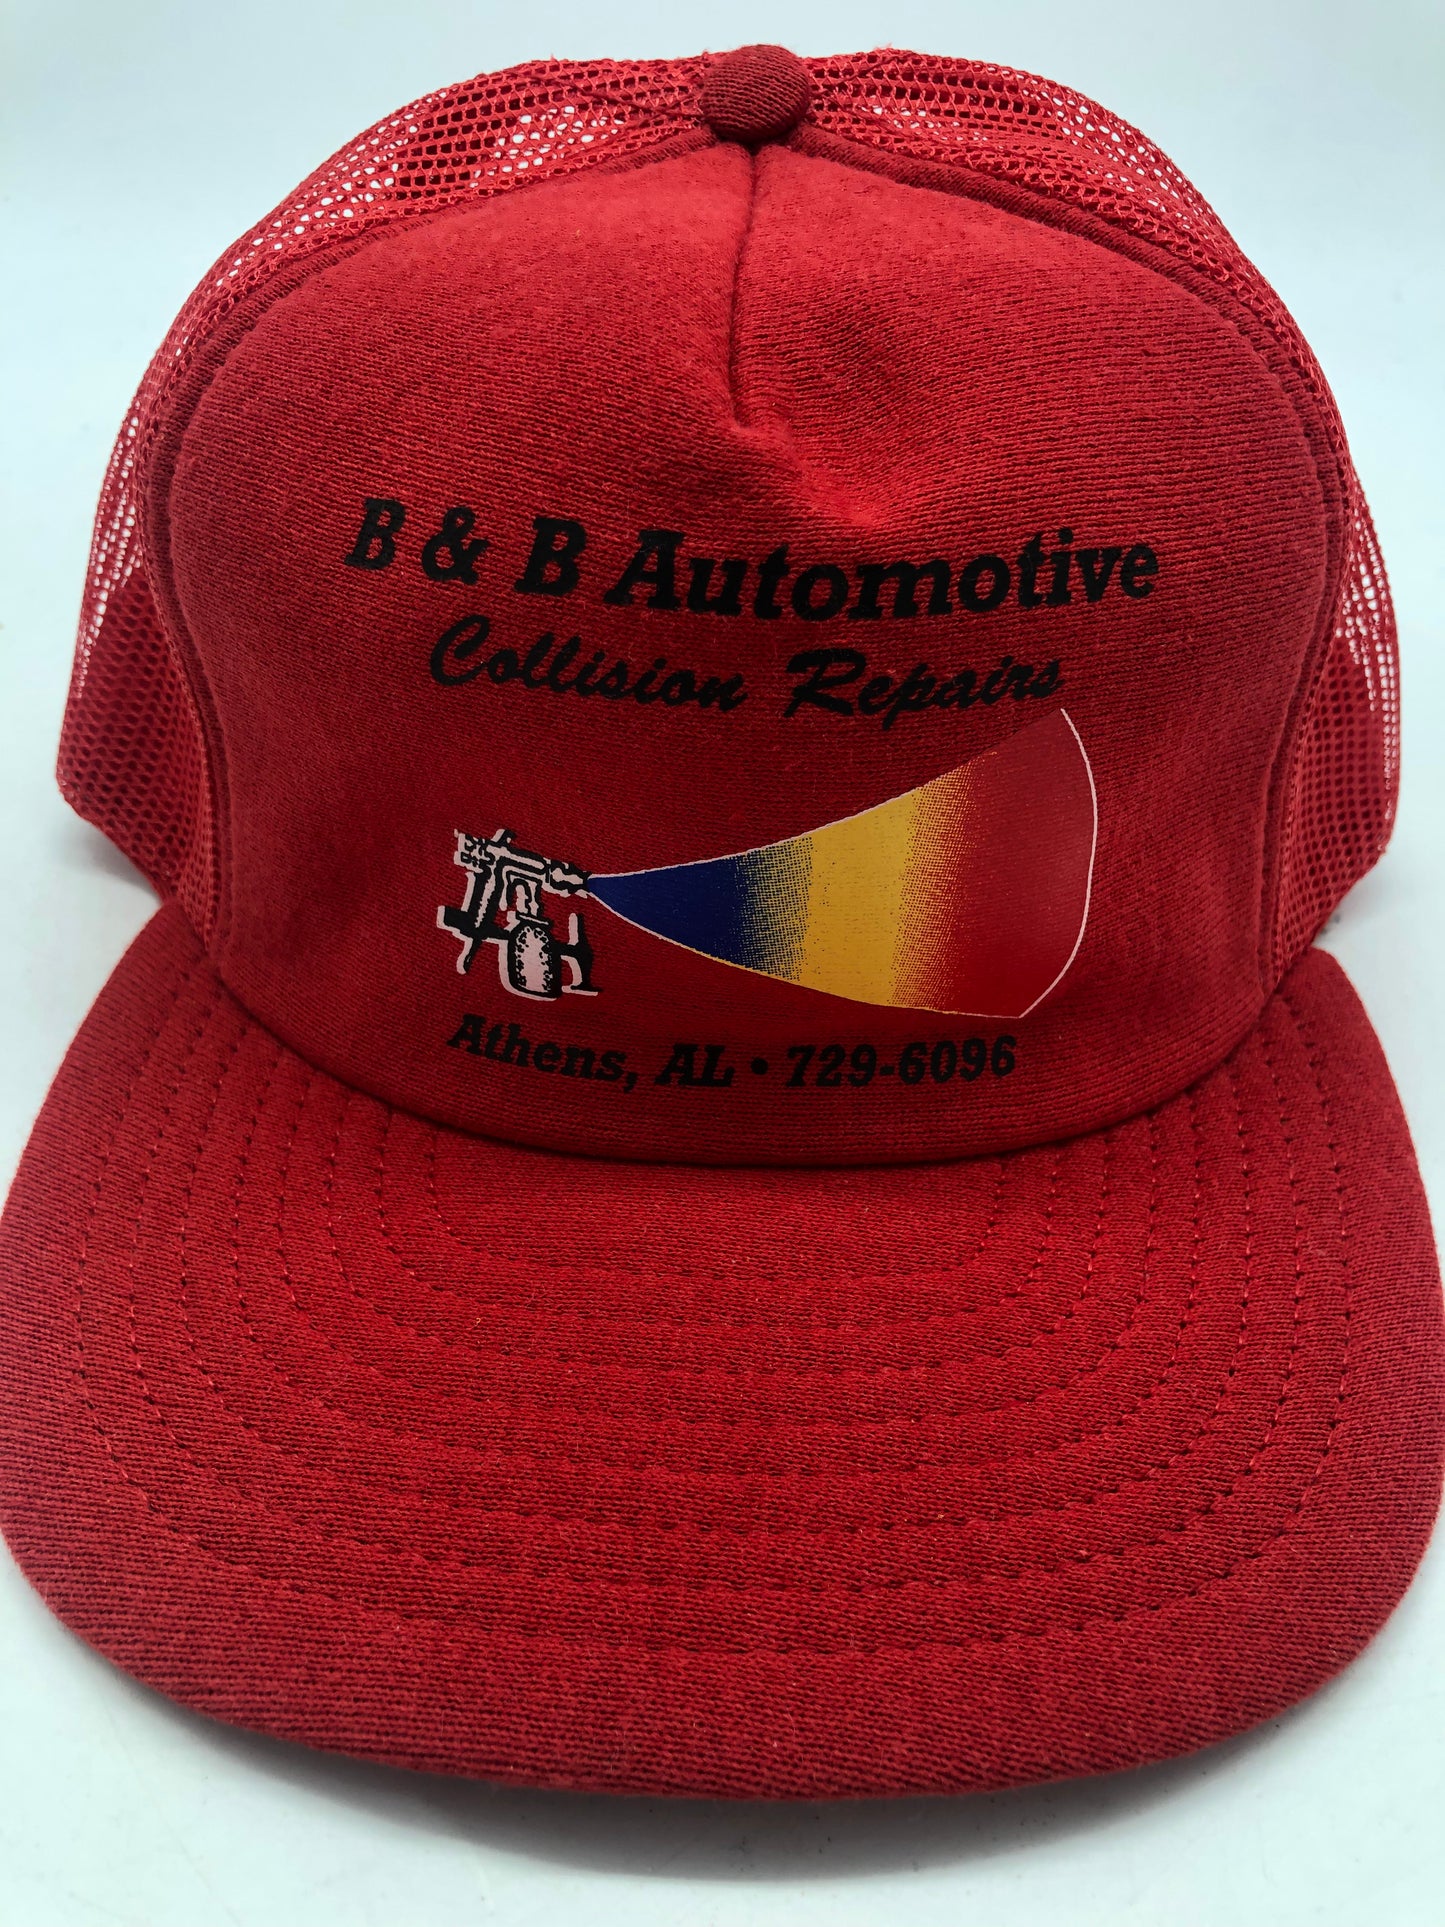 VTG B&B Automotive Collision Repairs SnapBack Hat